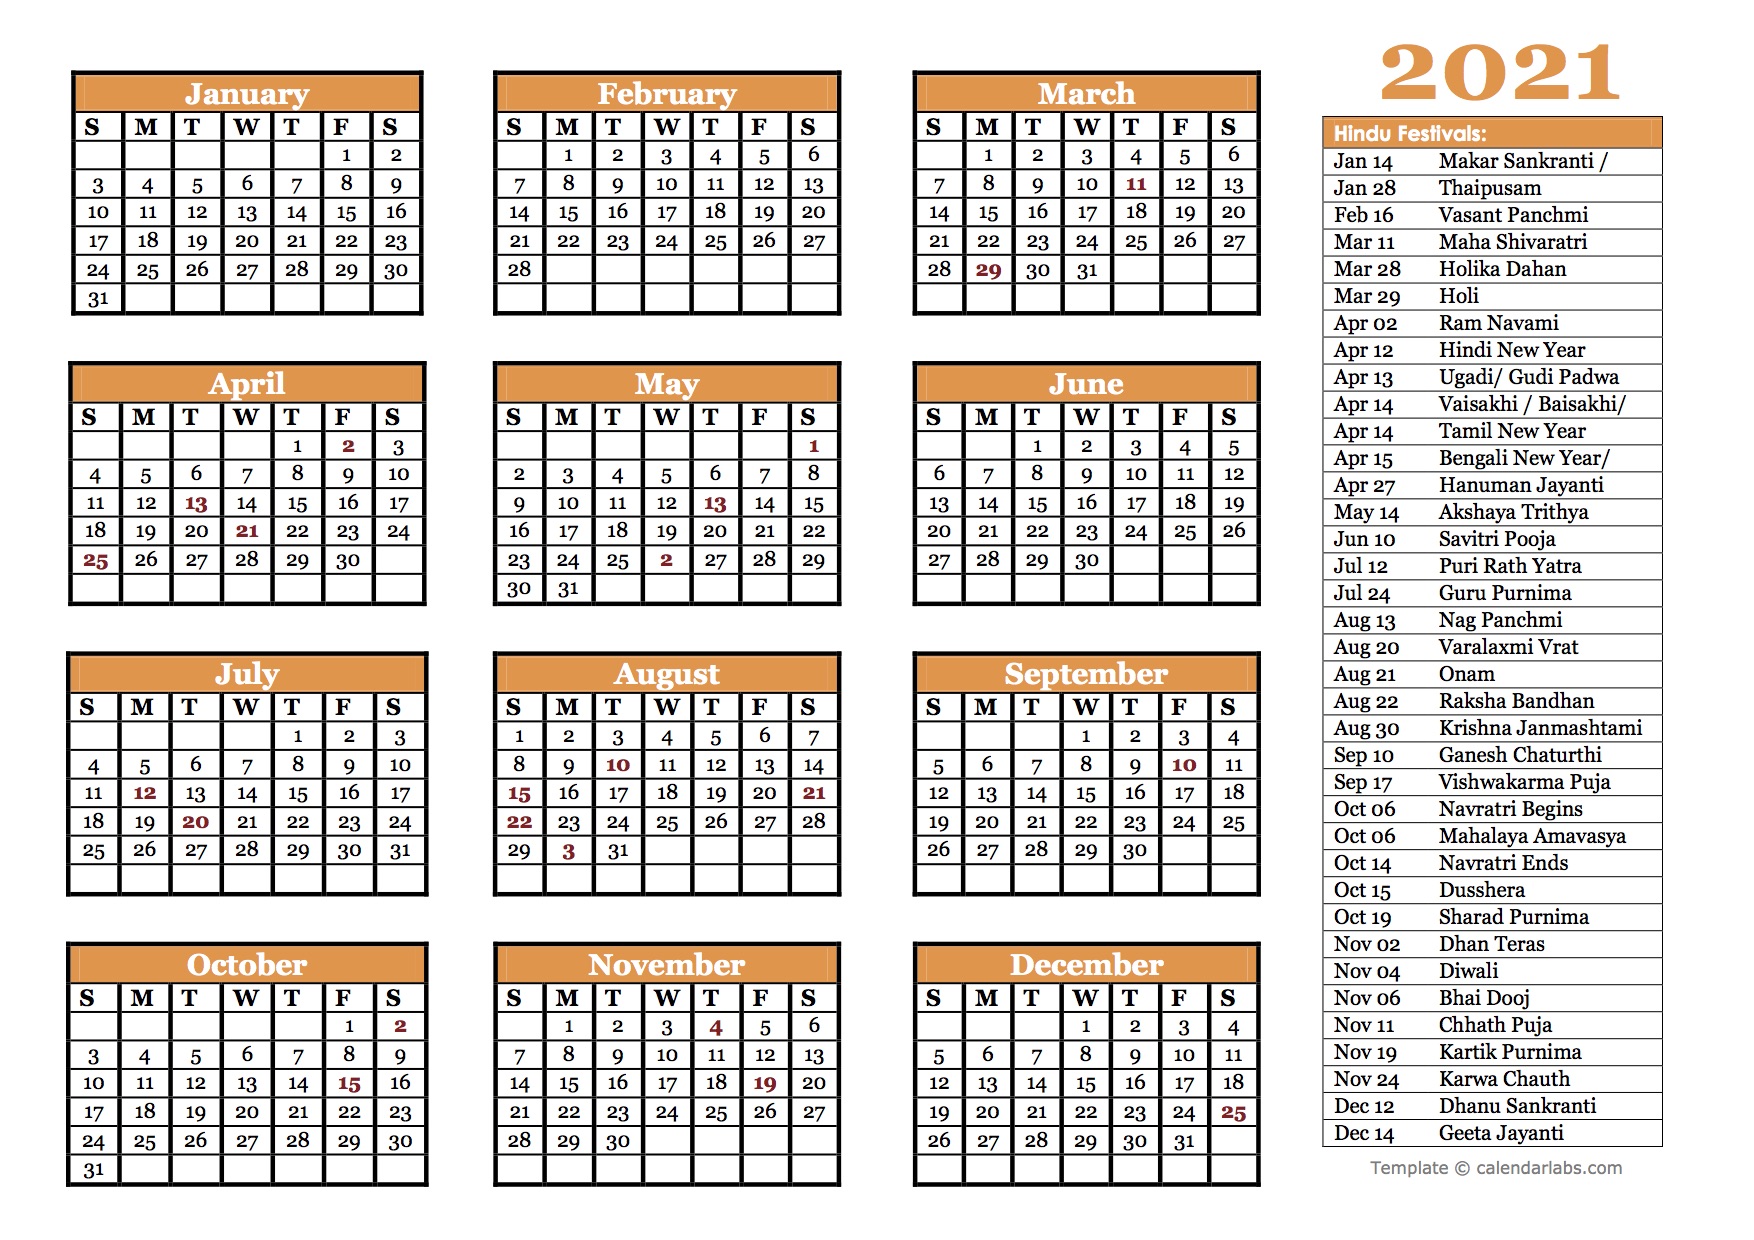 2021 Hindu Festivals Calendar Template Free Printable